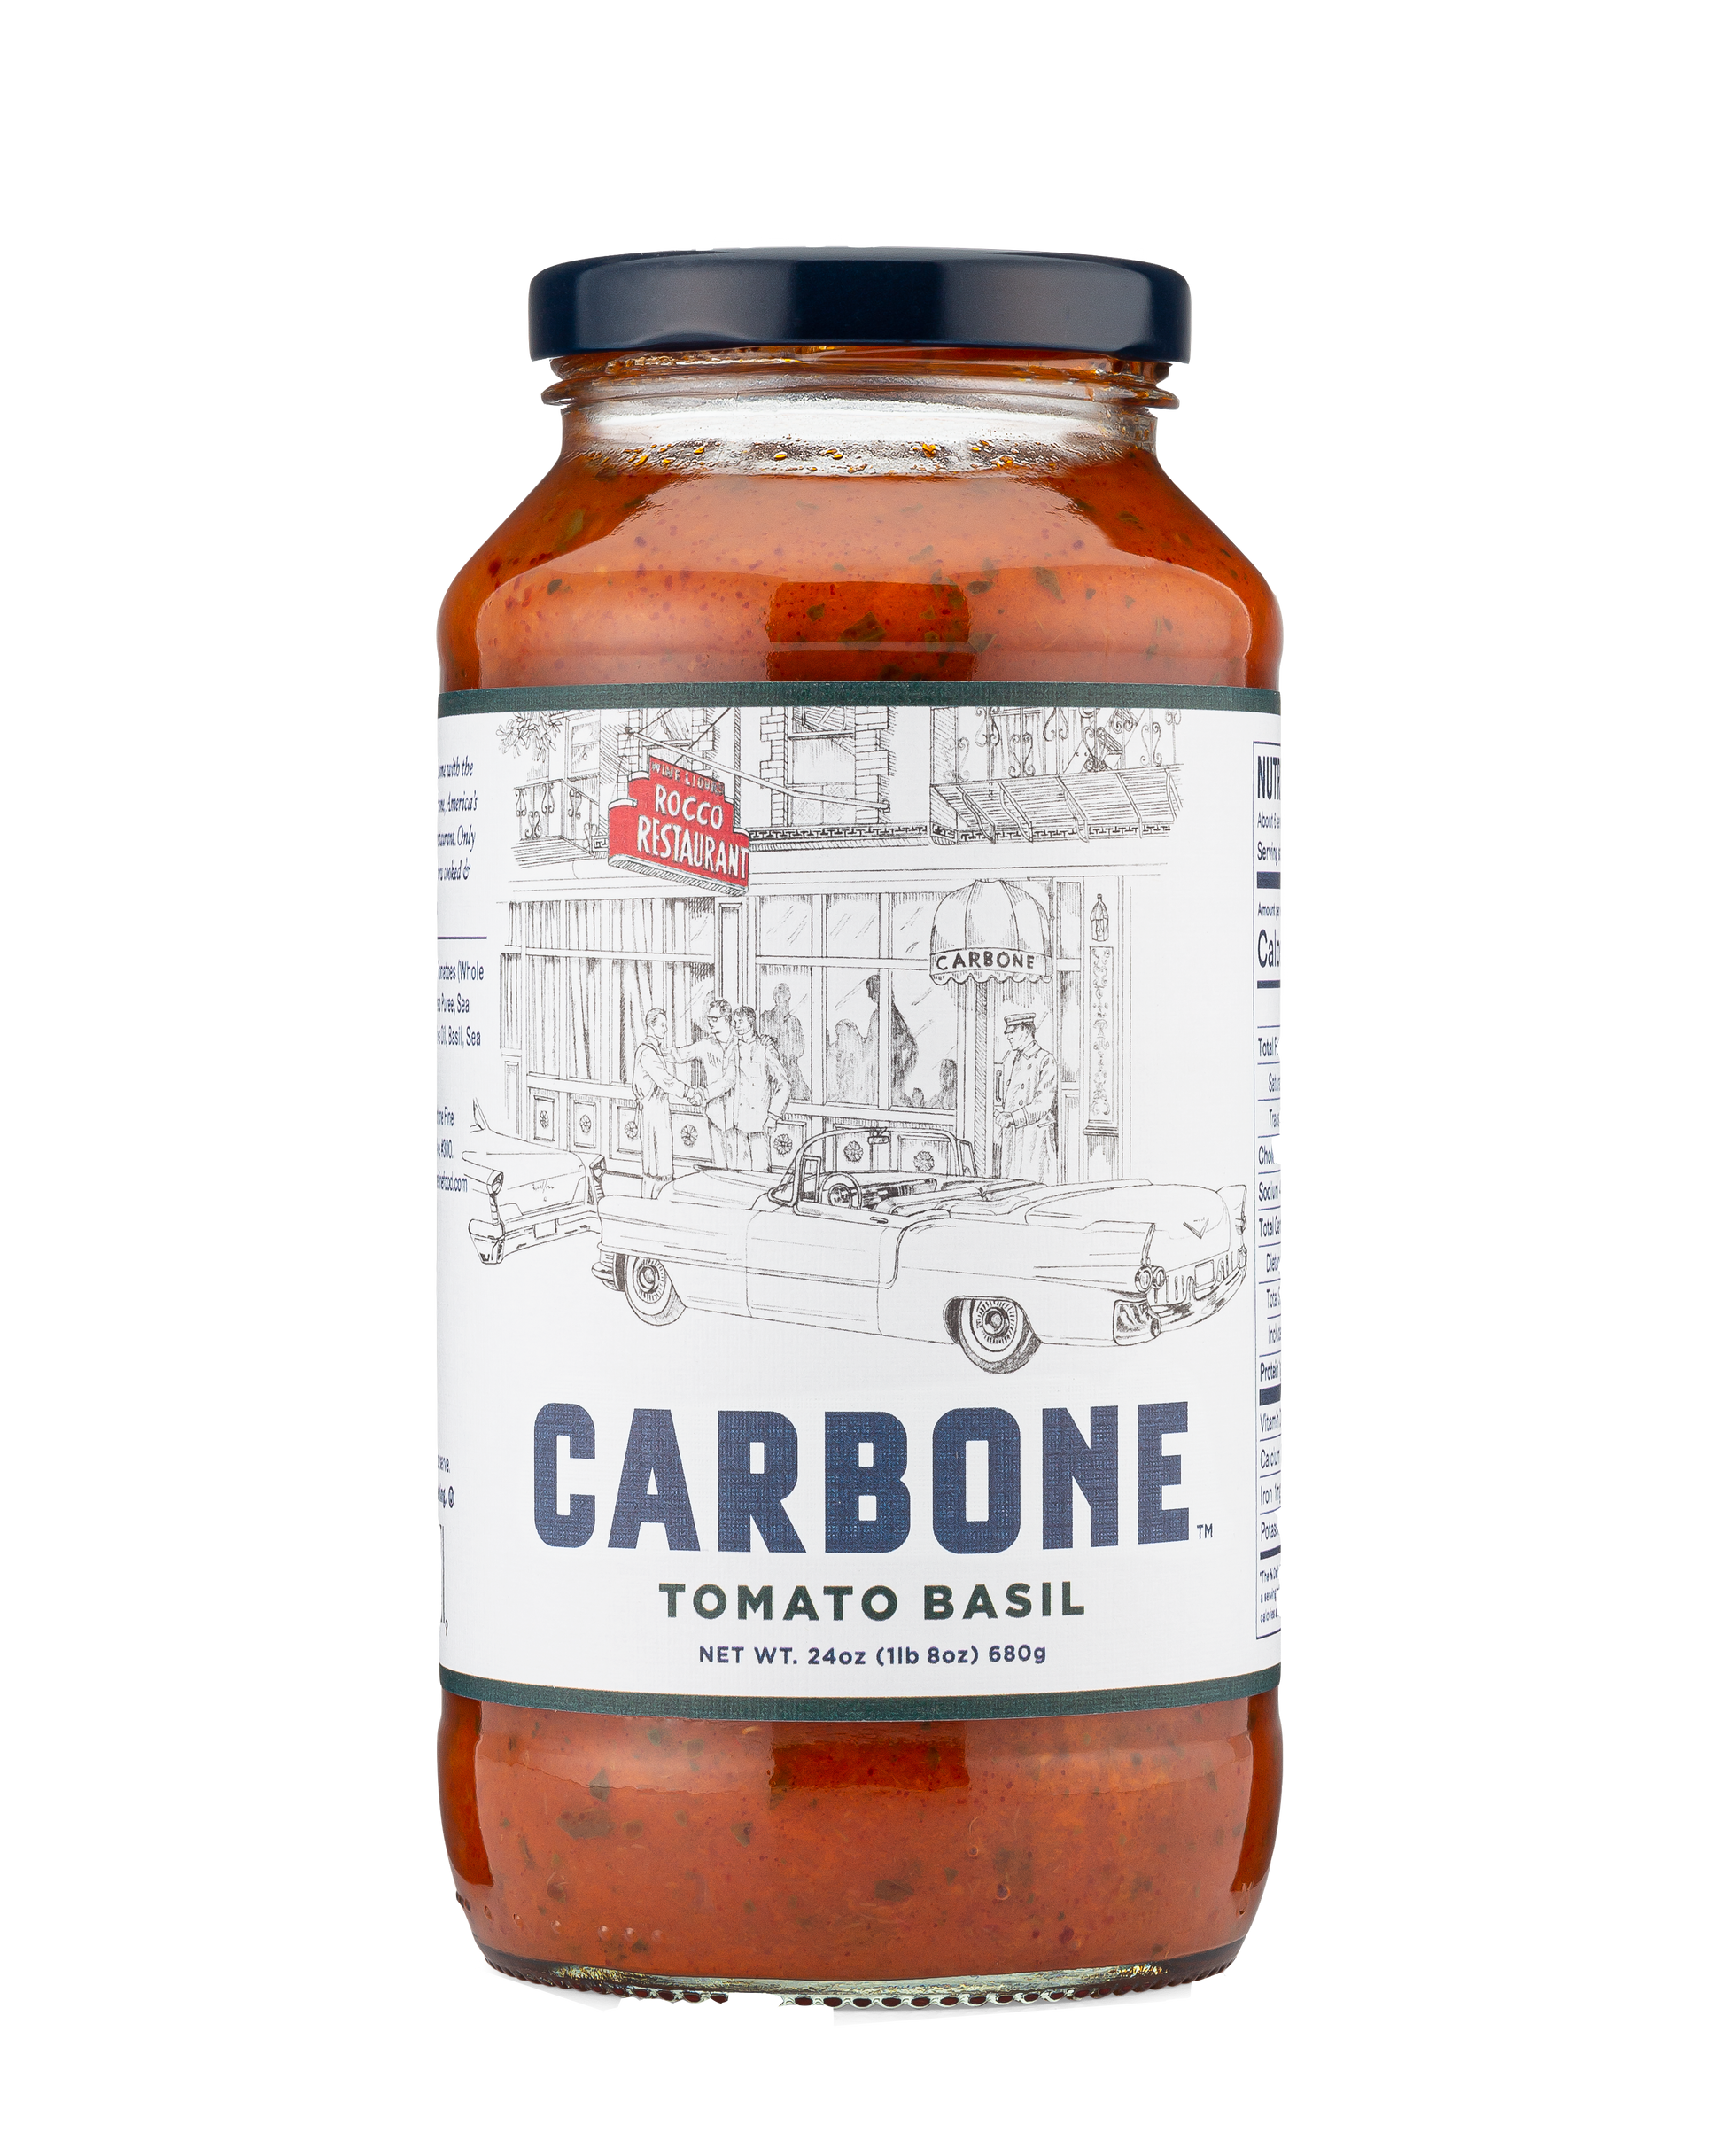 Carbone Tomato Basil Pasta Sauce Spaghetti Sauce Marinara